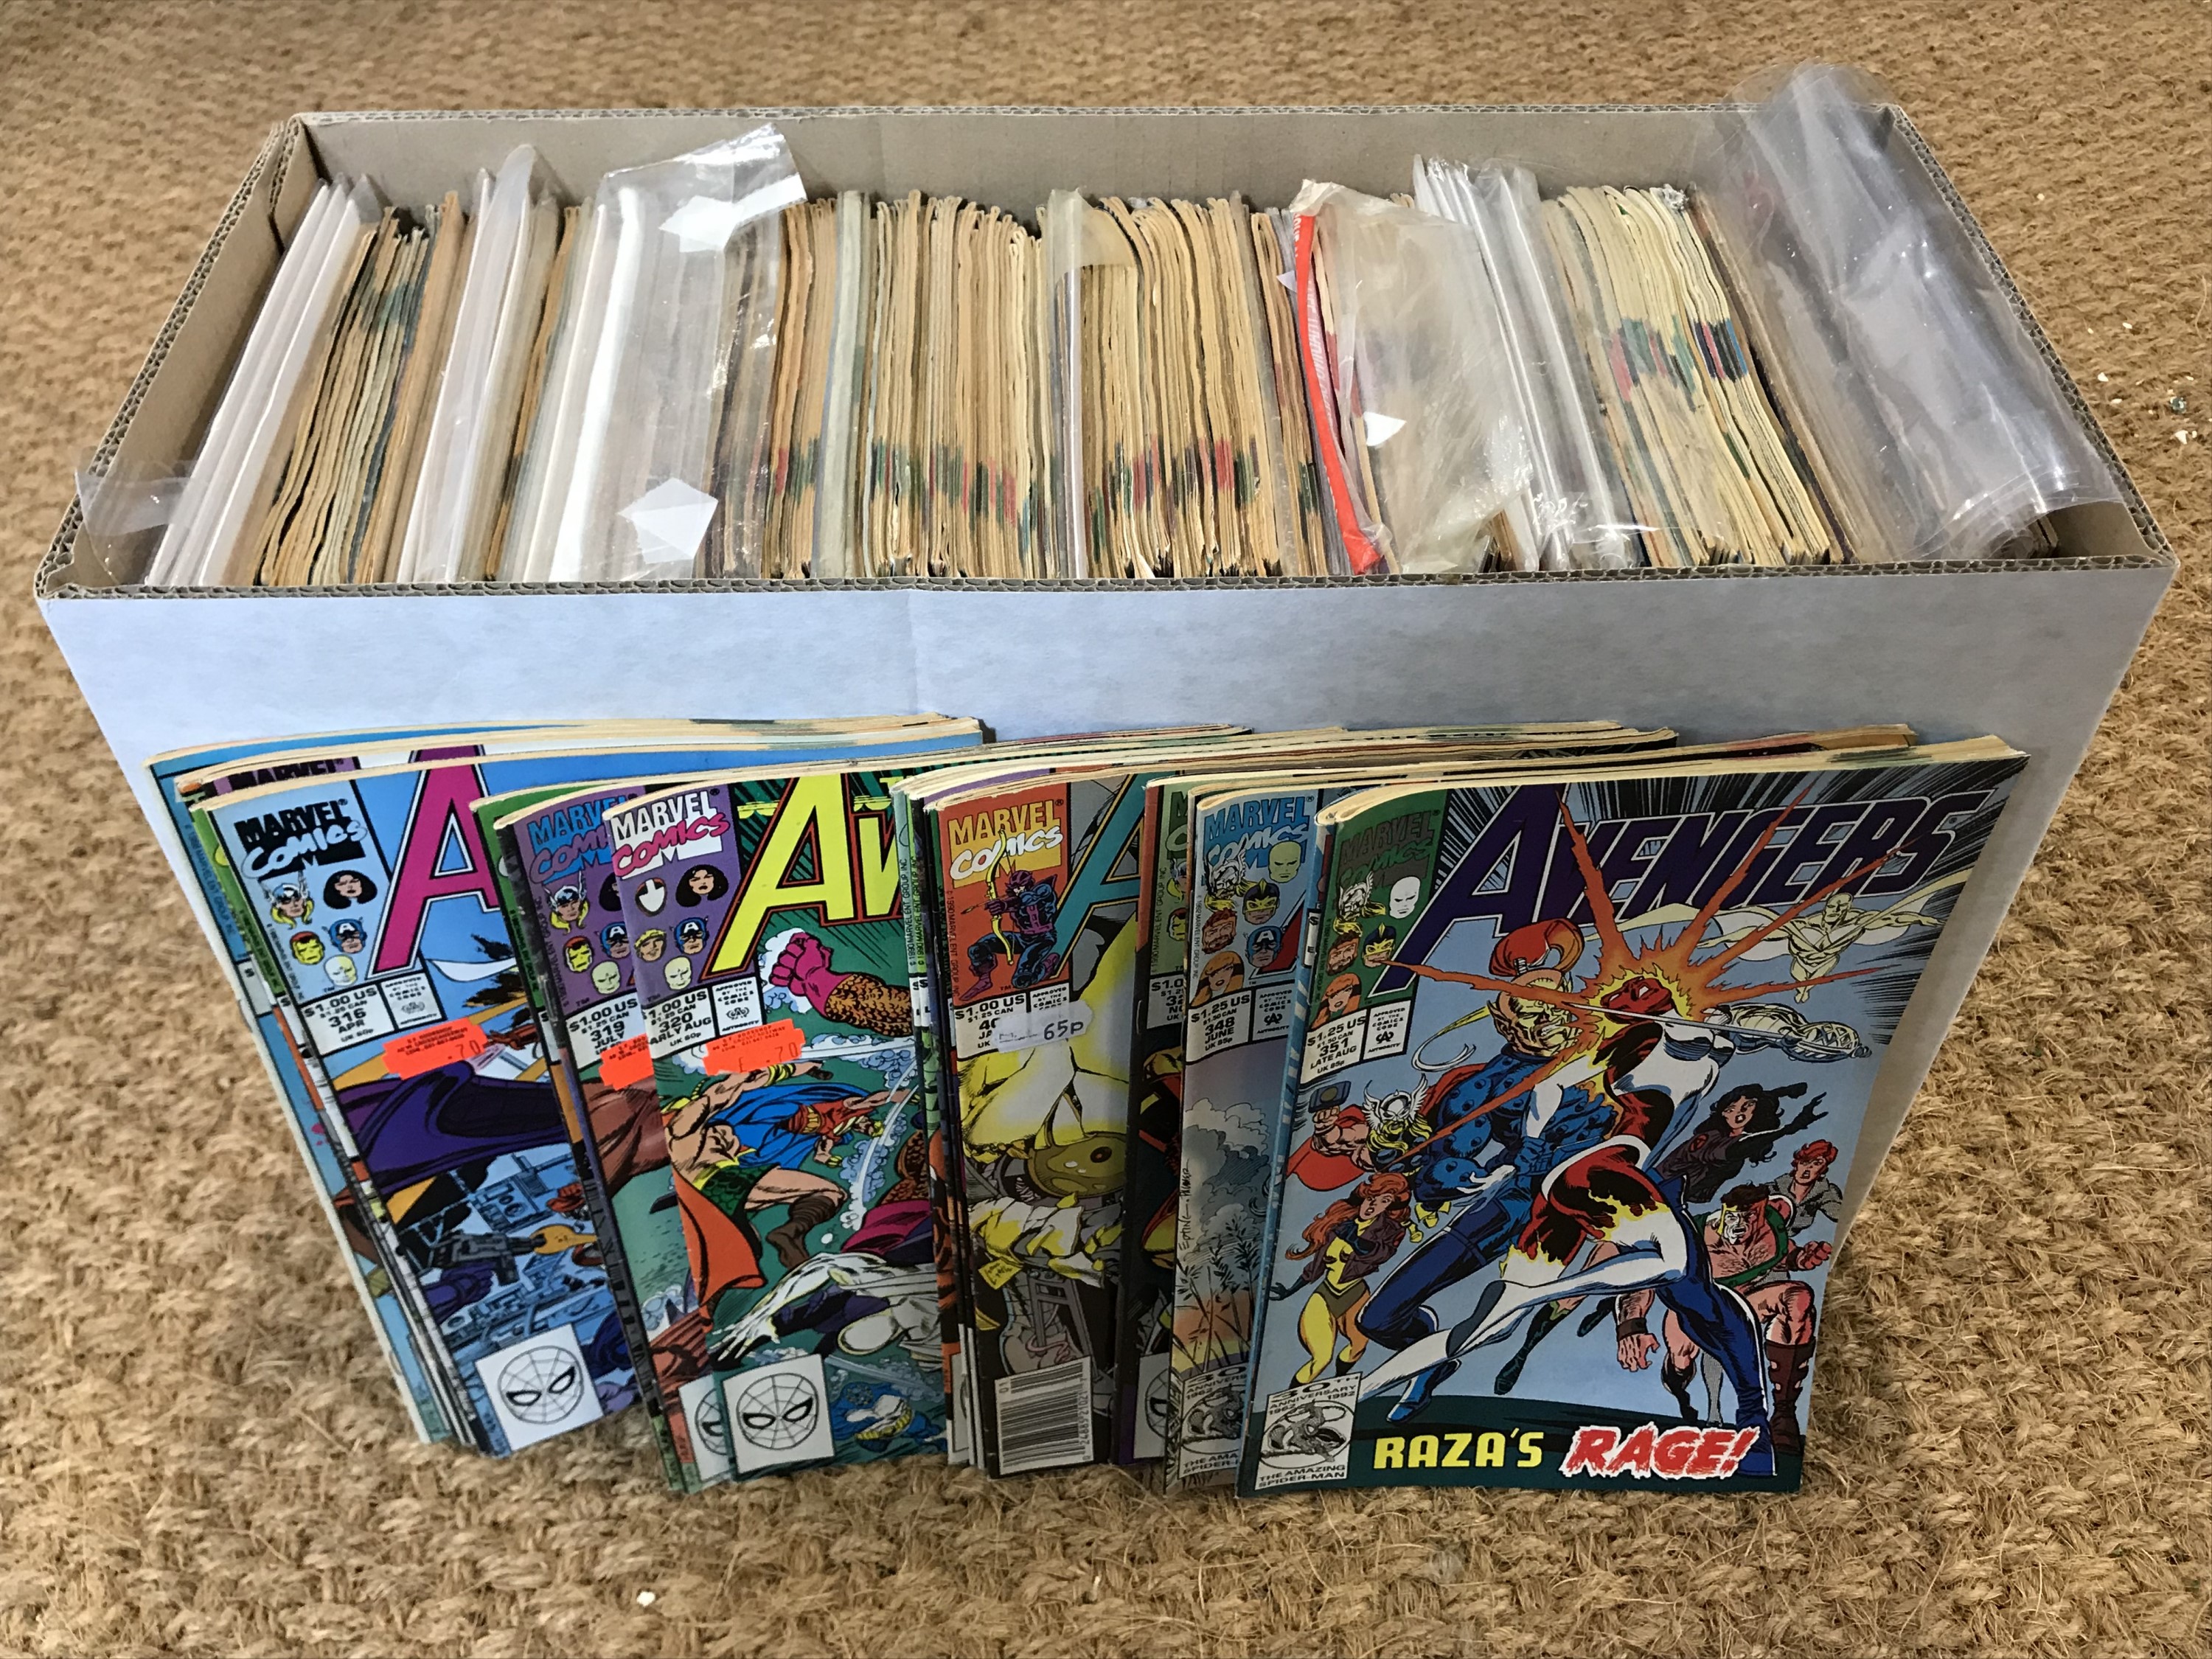 A quantity of various Marvel comics including Batman and the Avengers etc